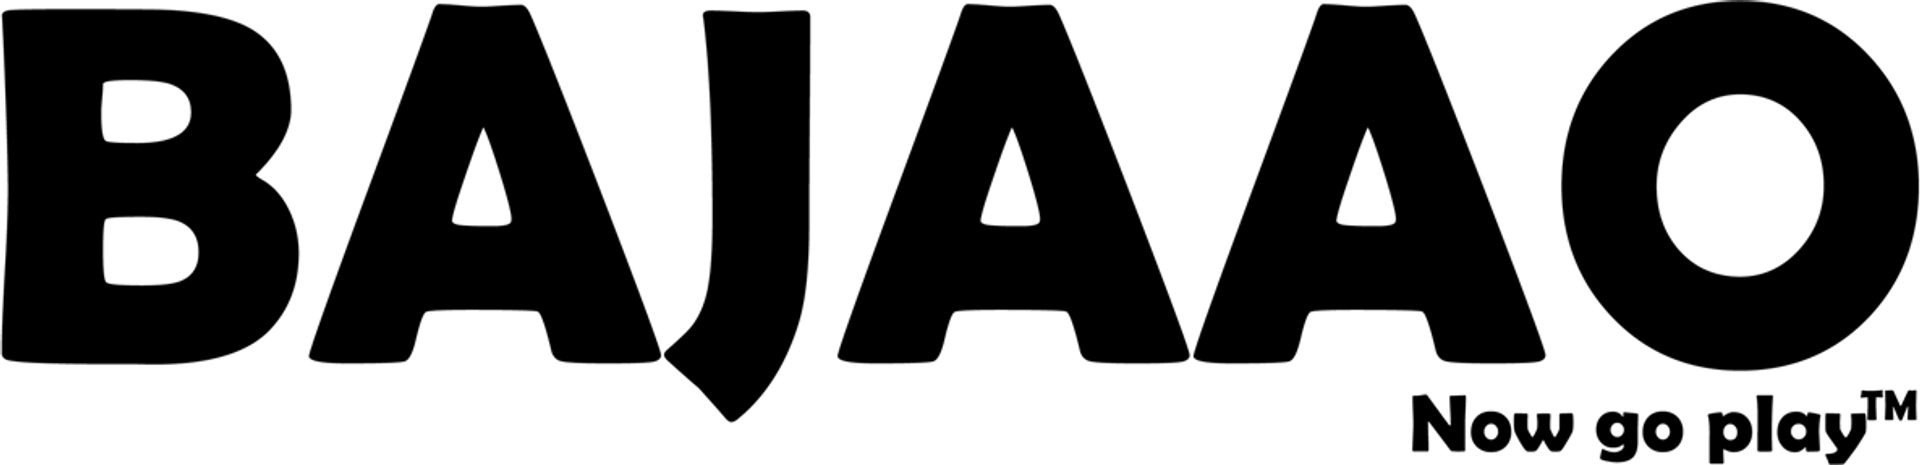 BAJAAO logo. Current catalogue